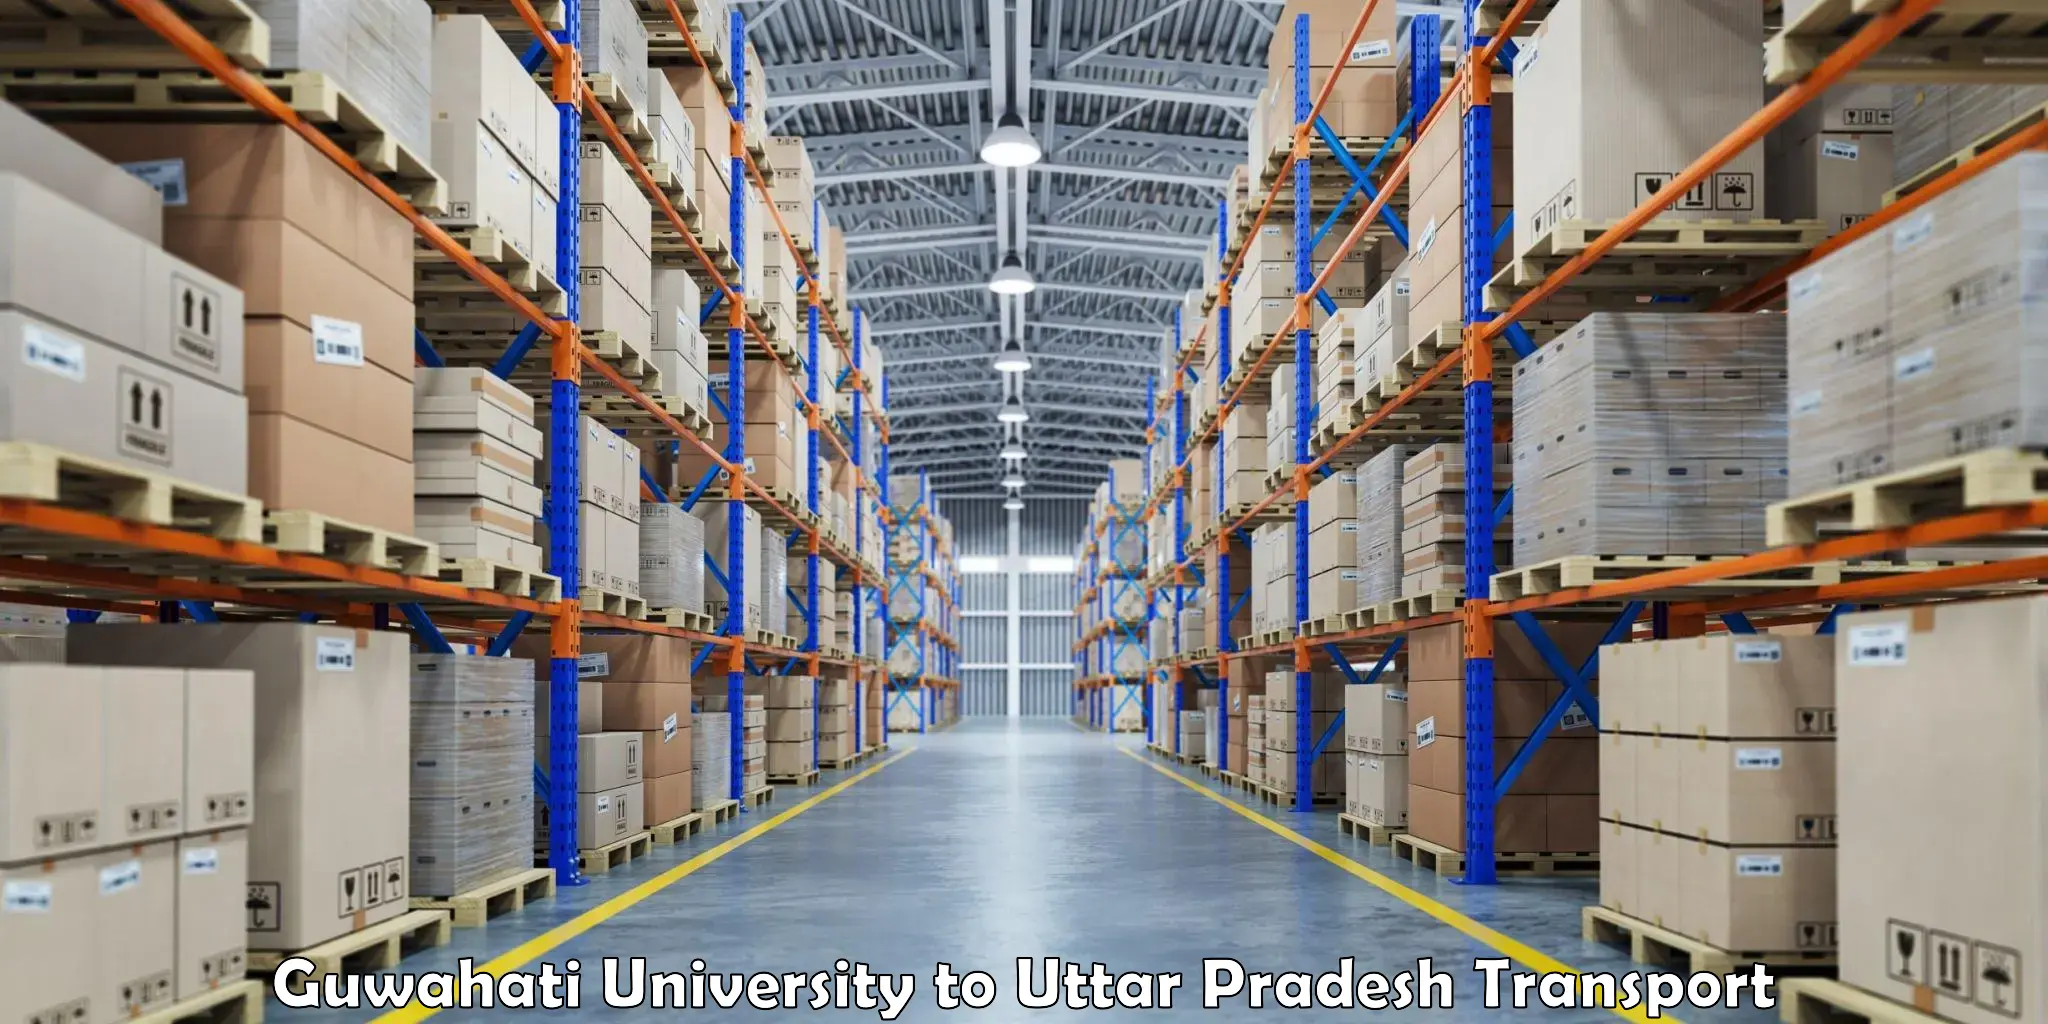 Truck transport companies in India Guwahati University to Shravasti